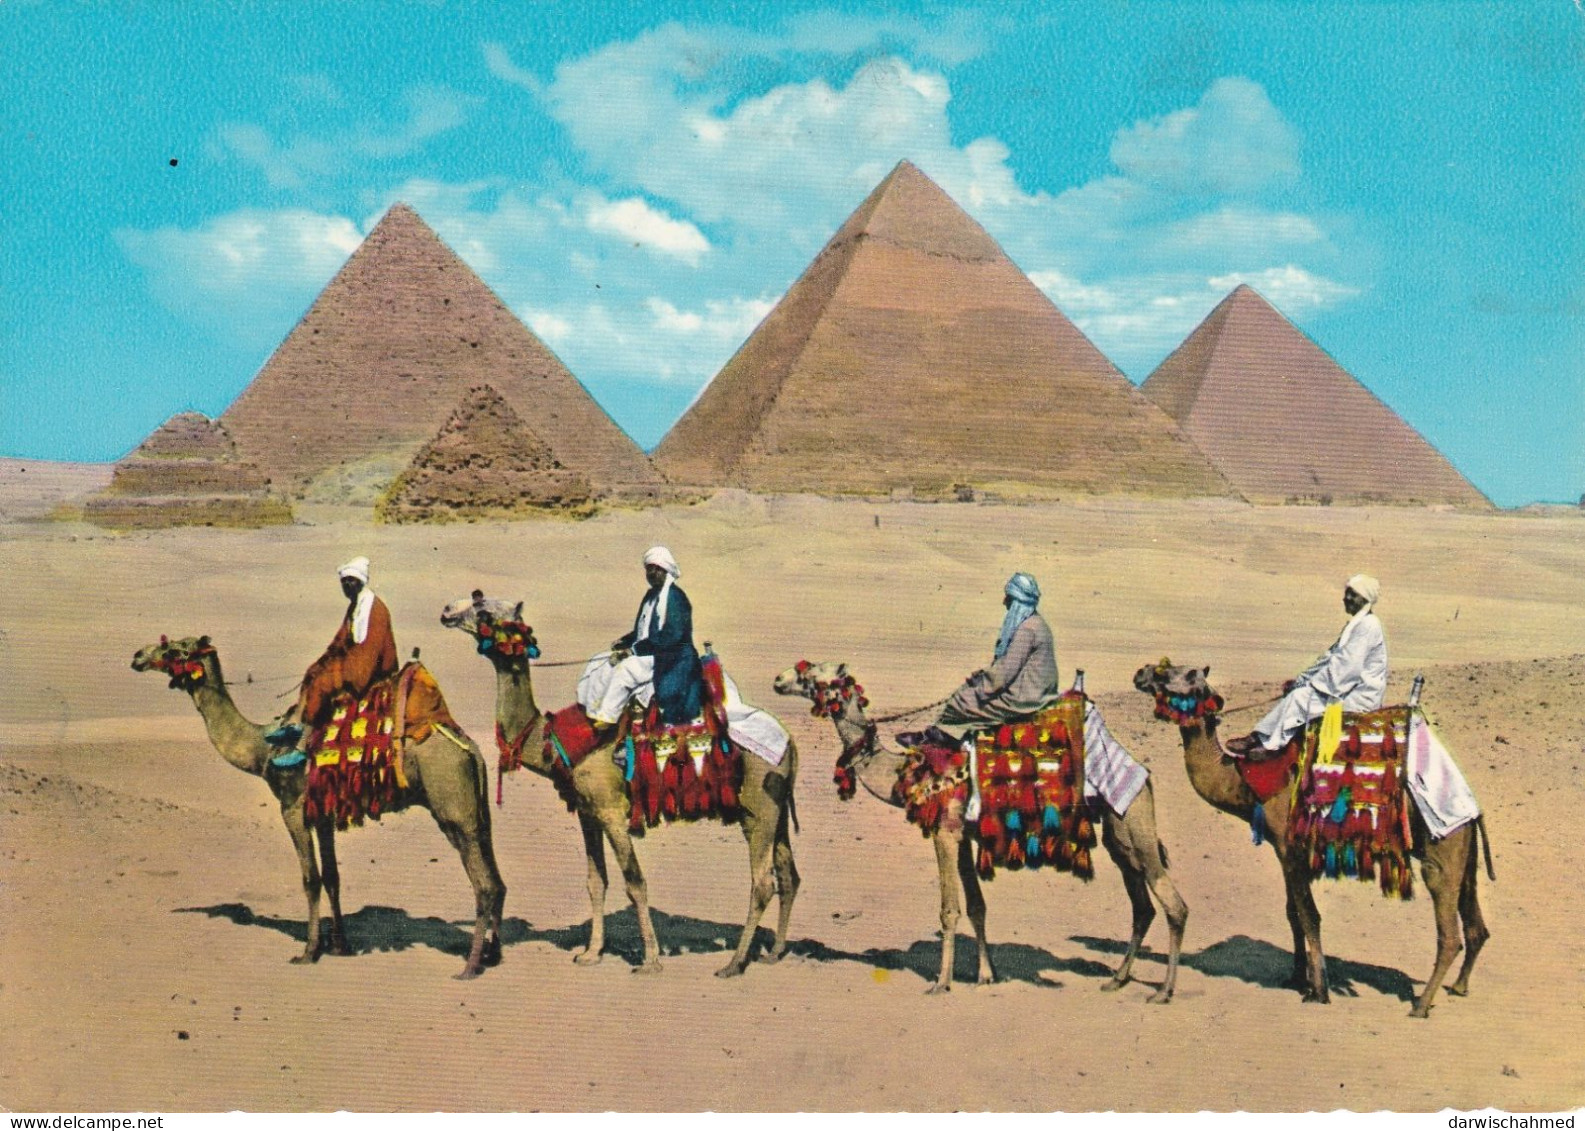 - ÄGYPTEN - EGYPT - DYNASTIE- ÄGYPTOLOGIE - SPHINX AUF CEOPSPYRAMIDE - POST CARD - USED - Piramiden